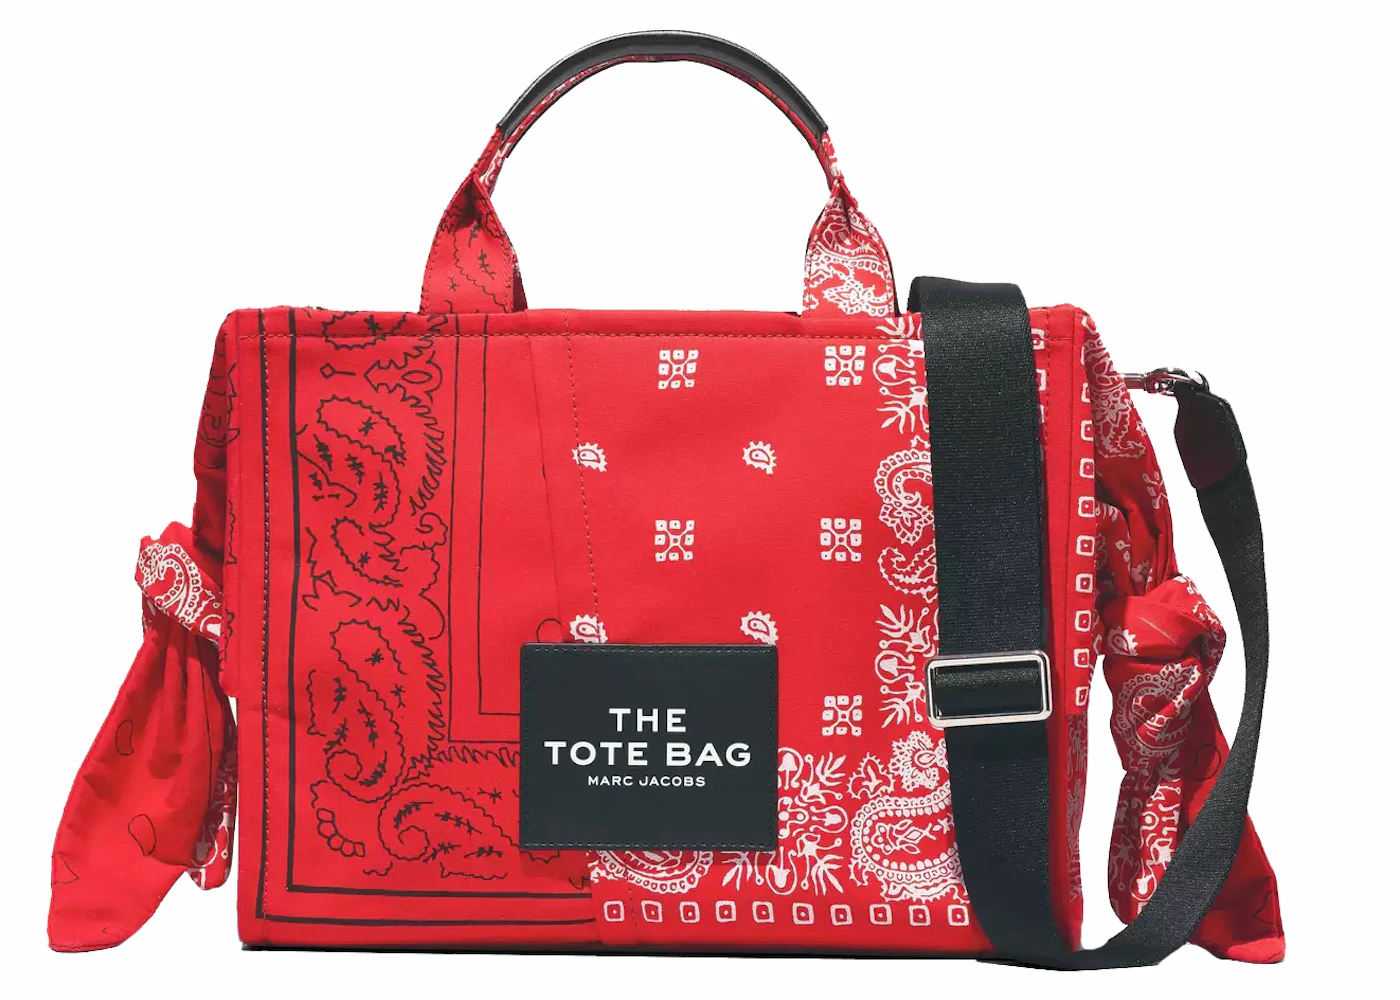 MARC JACOBS: handbag for woman - Red